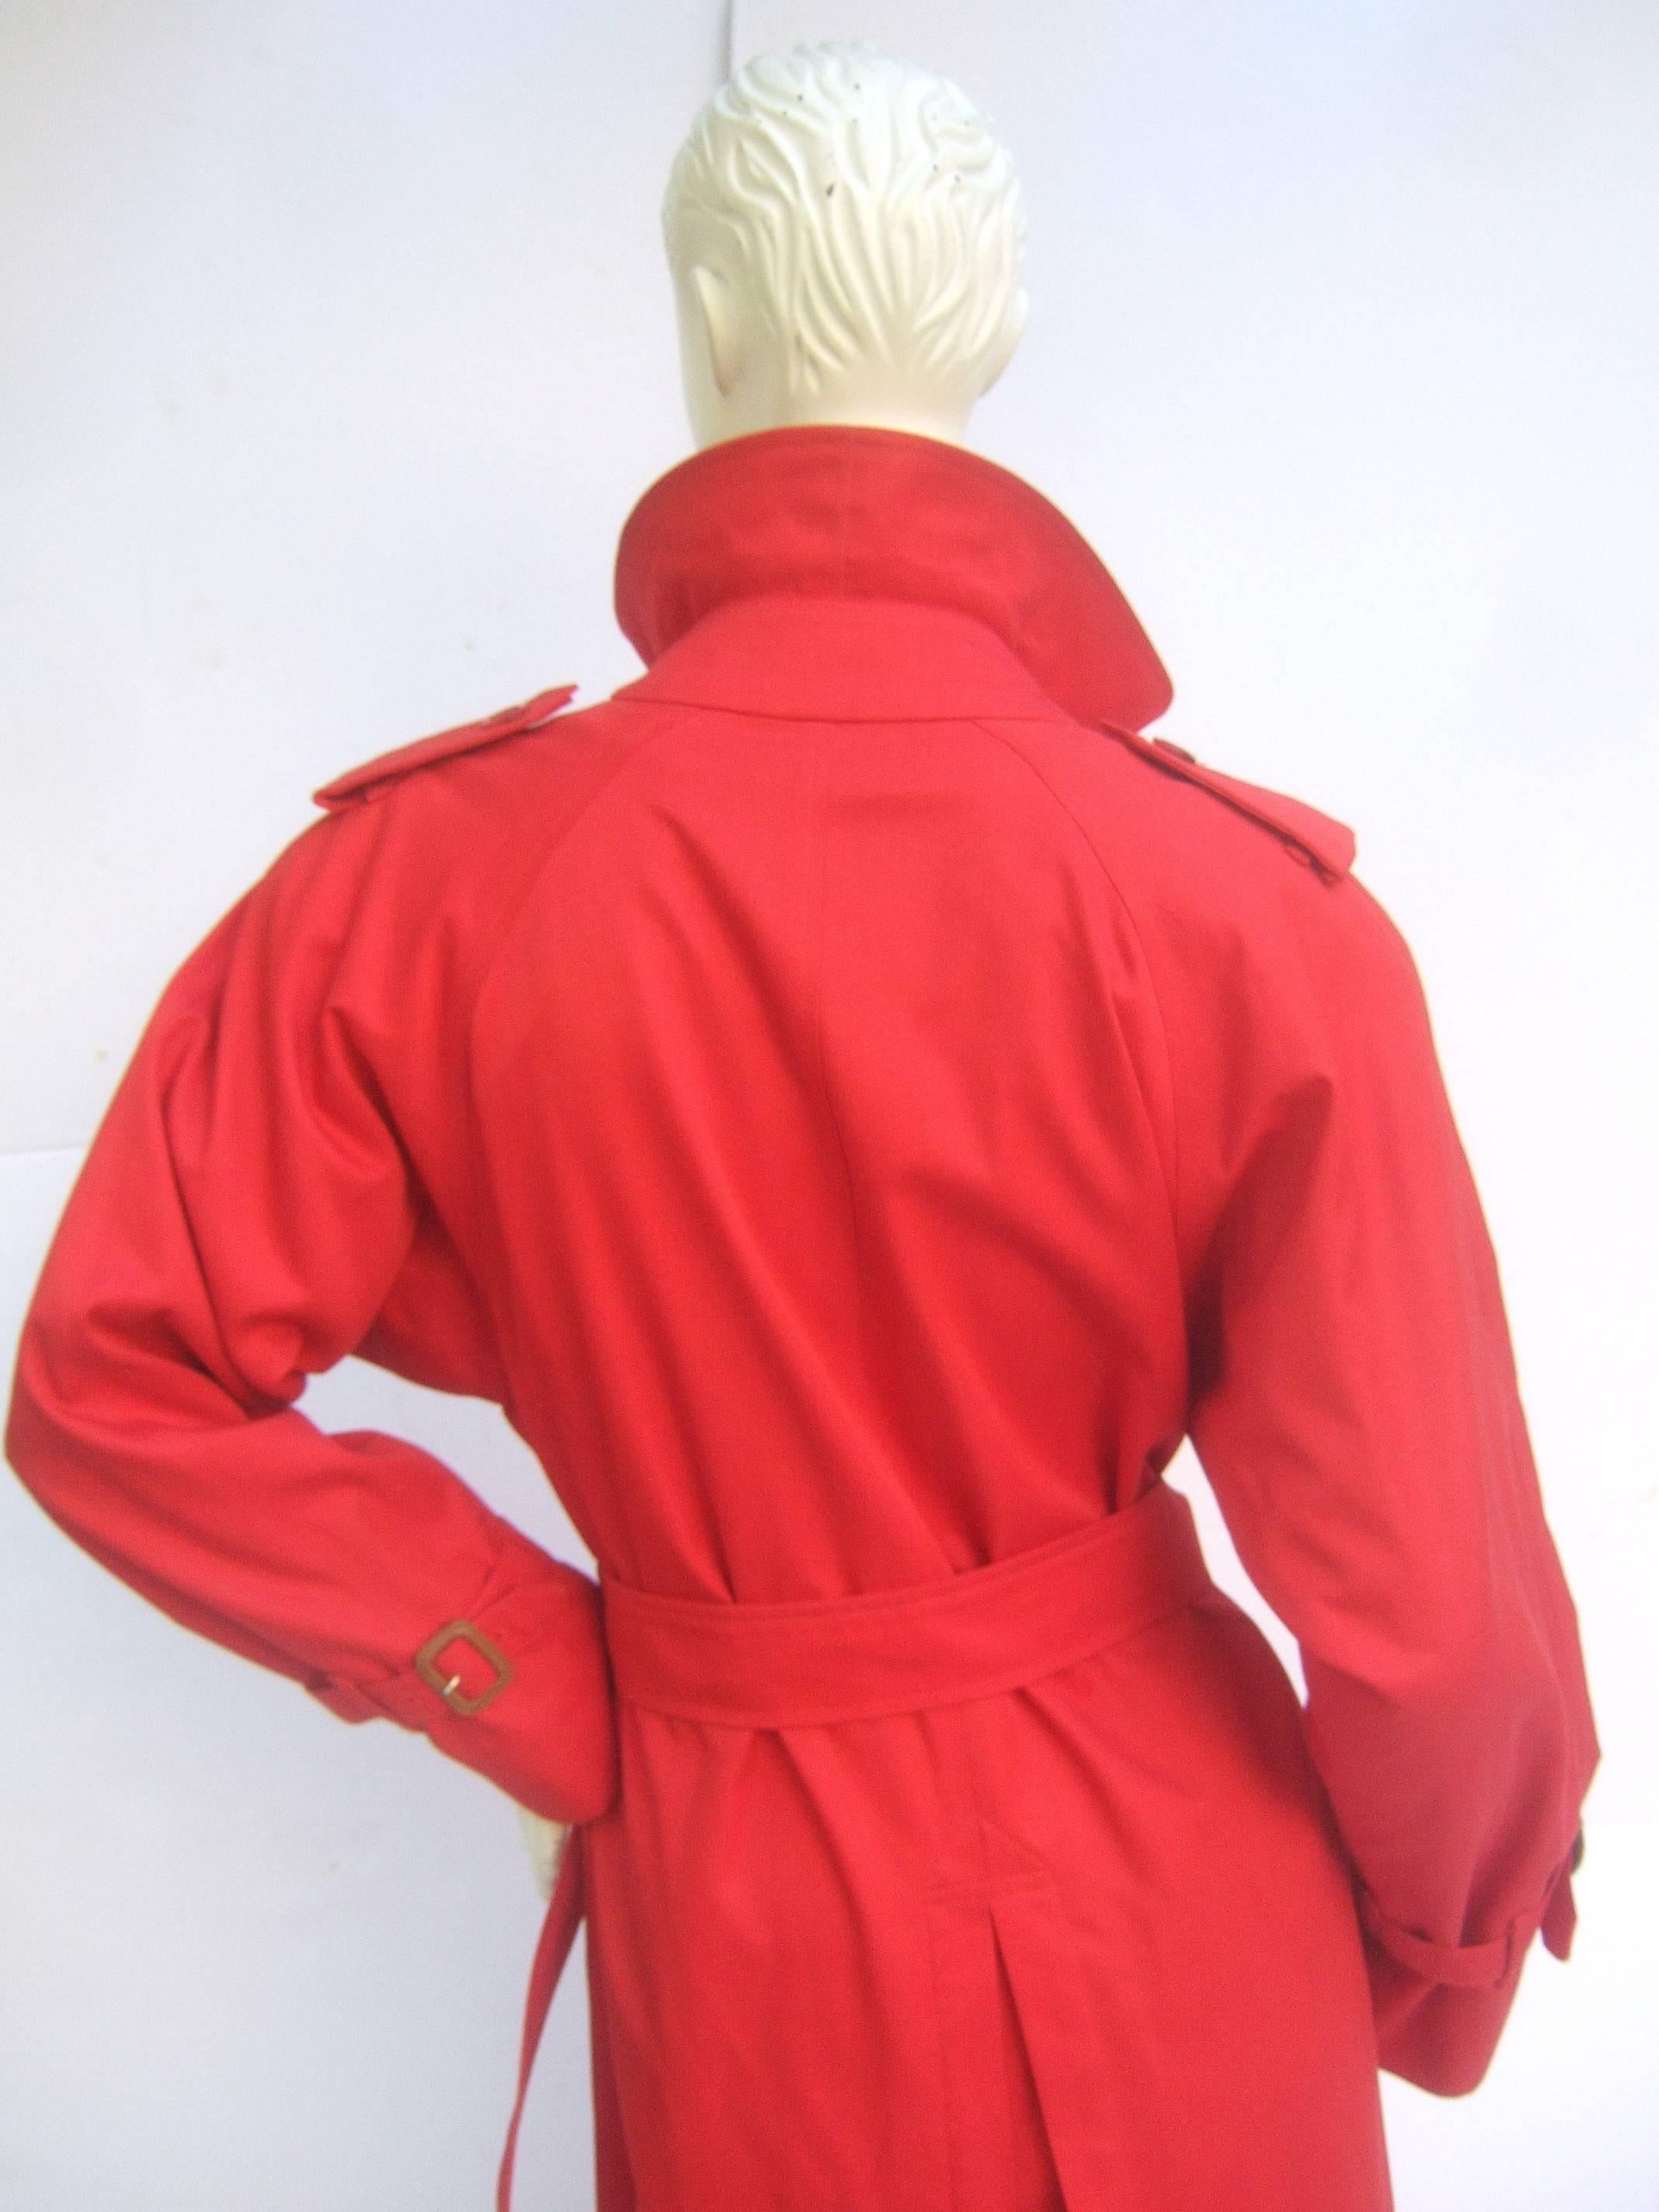 Burberry's Cherry Red Nova Plaid Trench Coat c 1990s 2